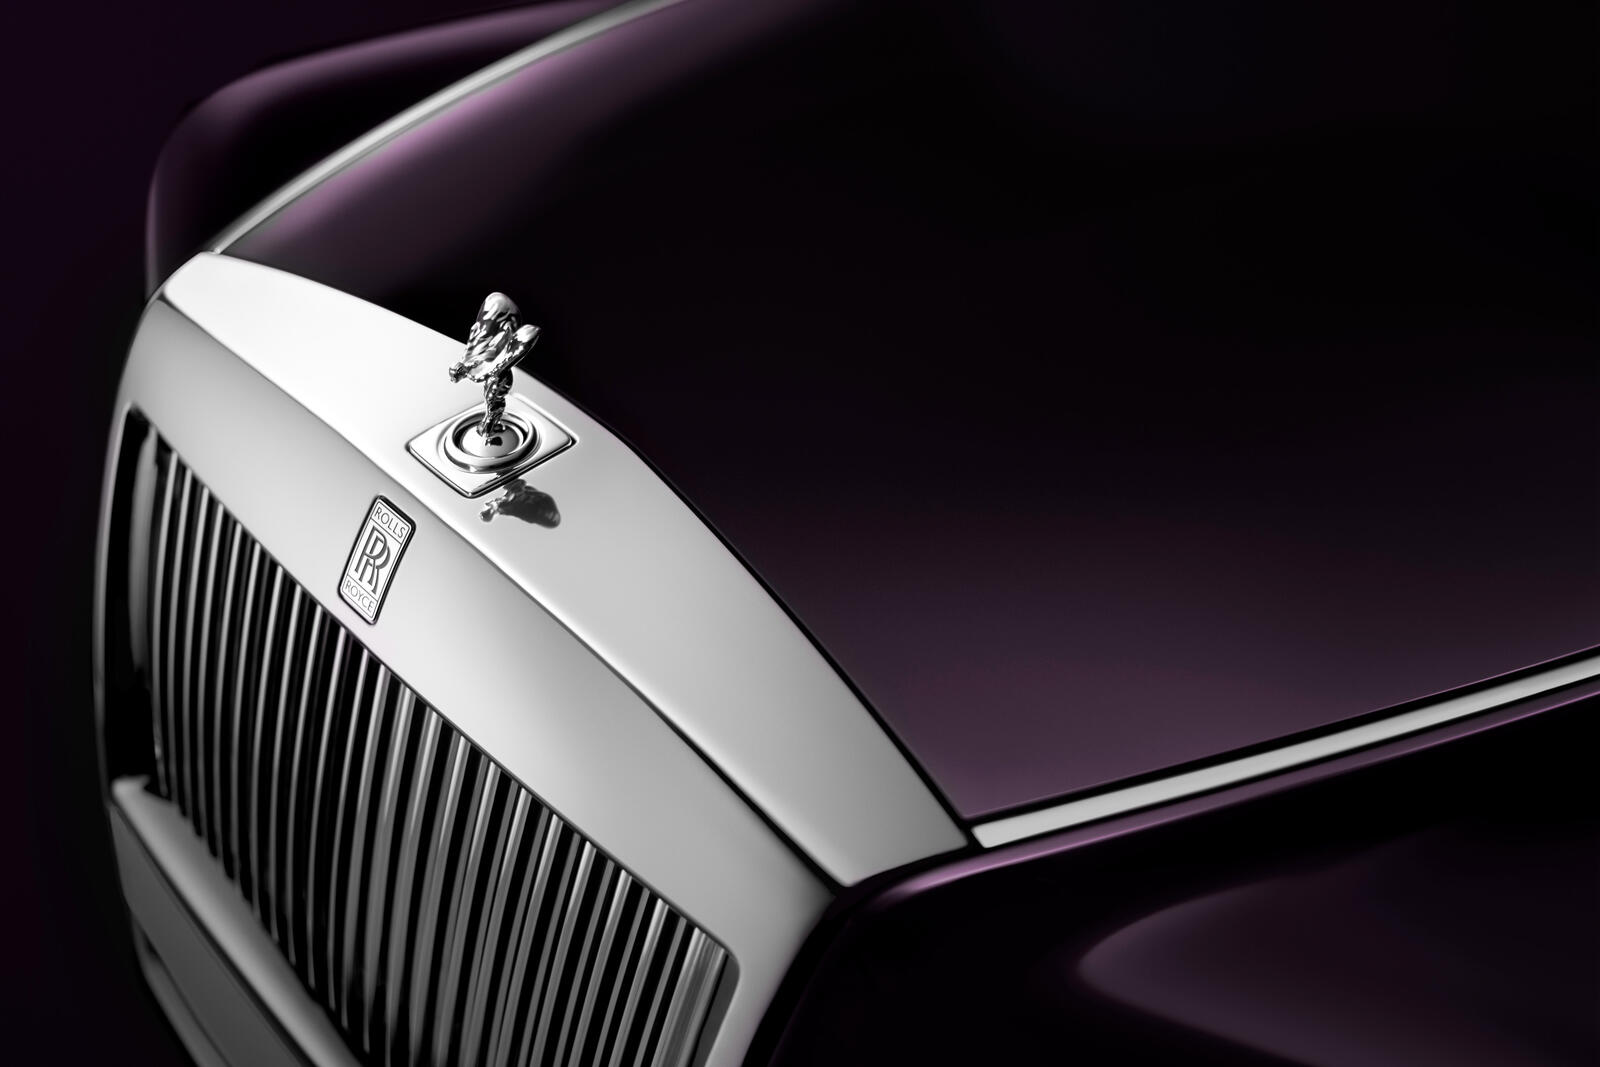 Wallpapers Rolls Royce automobiles 2017 cars on the desktop